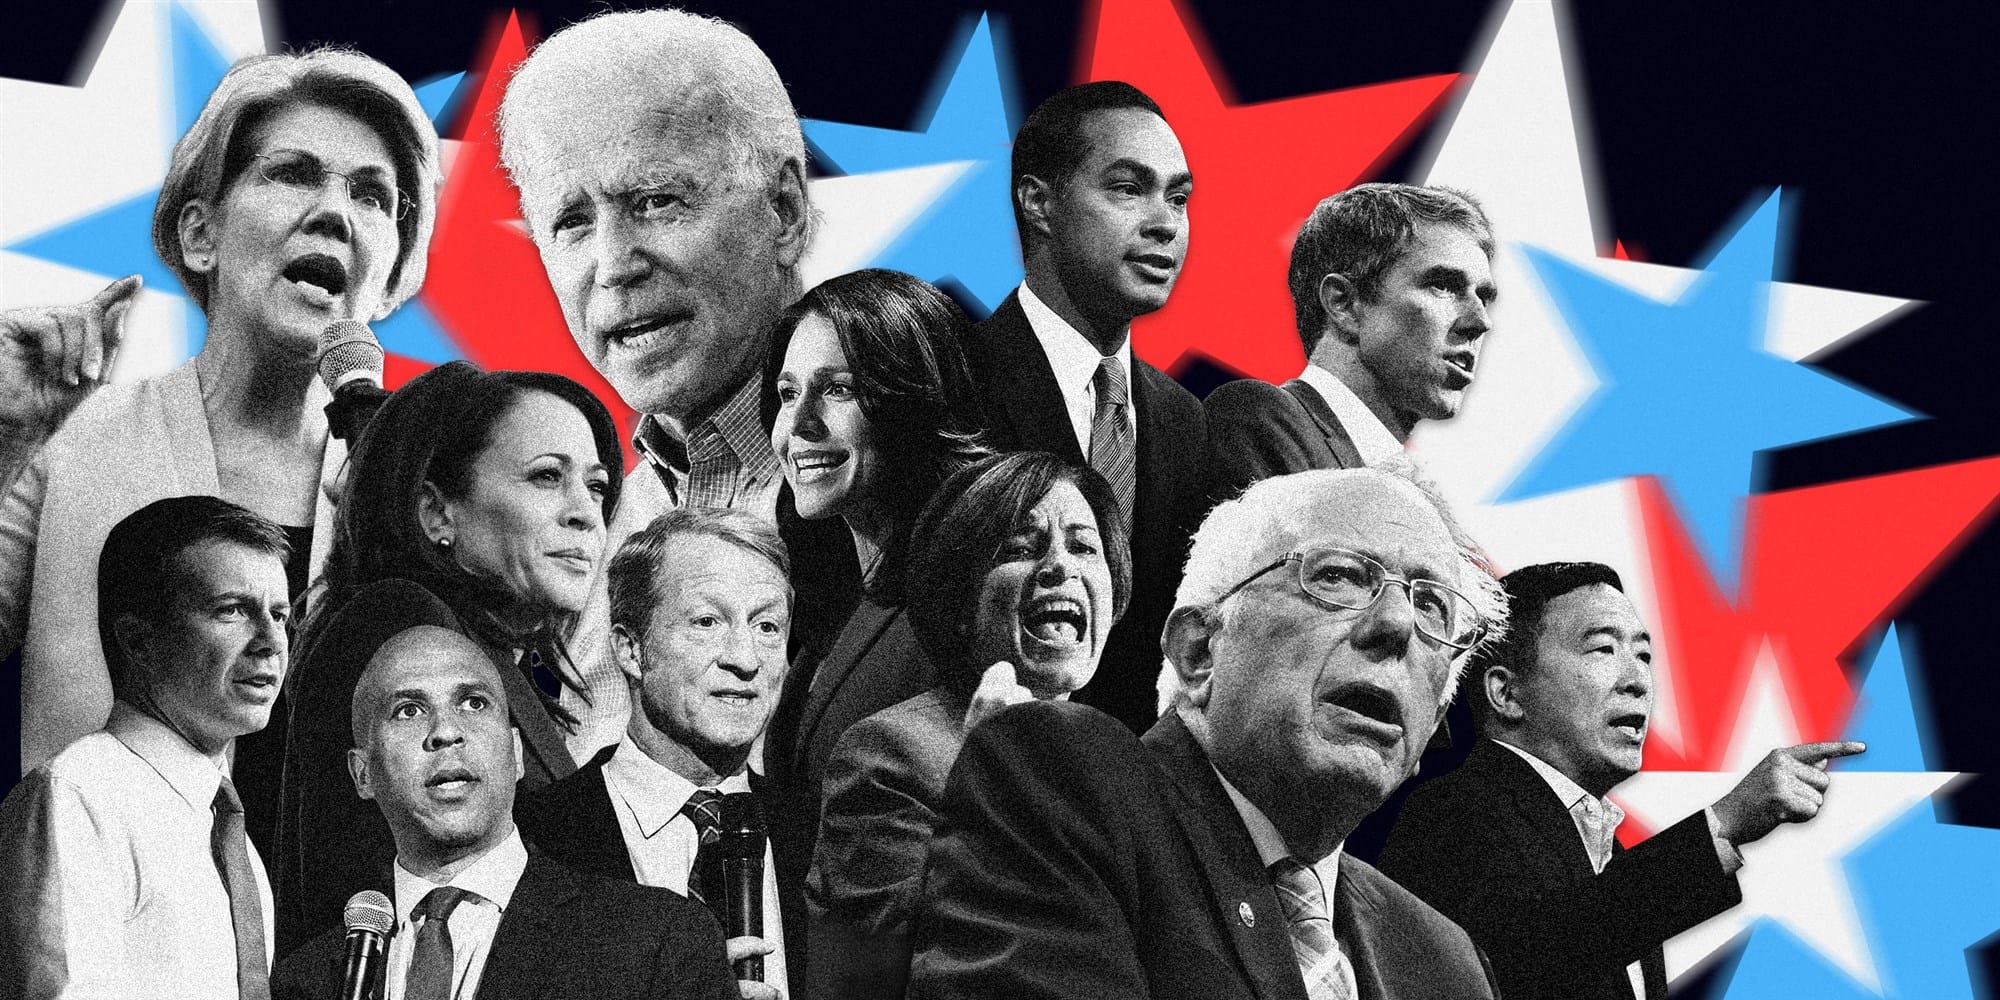 Twelve 2020 democratic presidential candidates